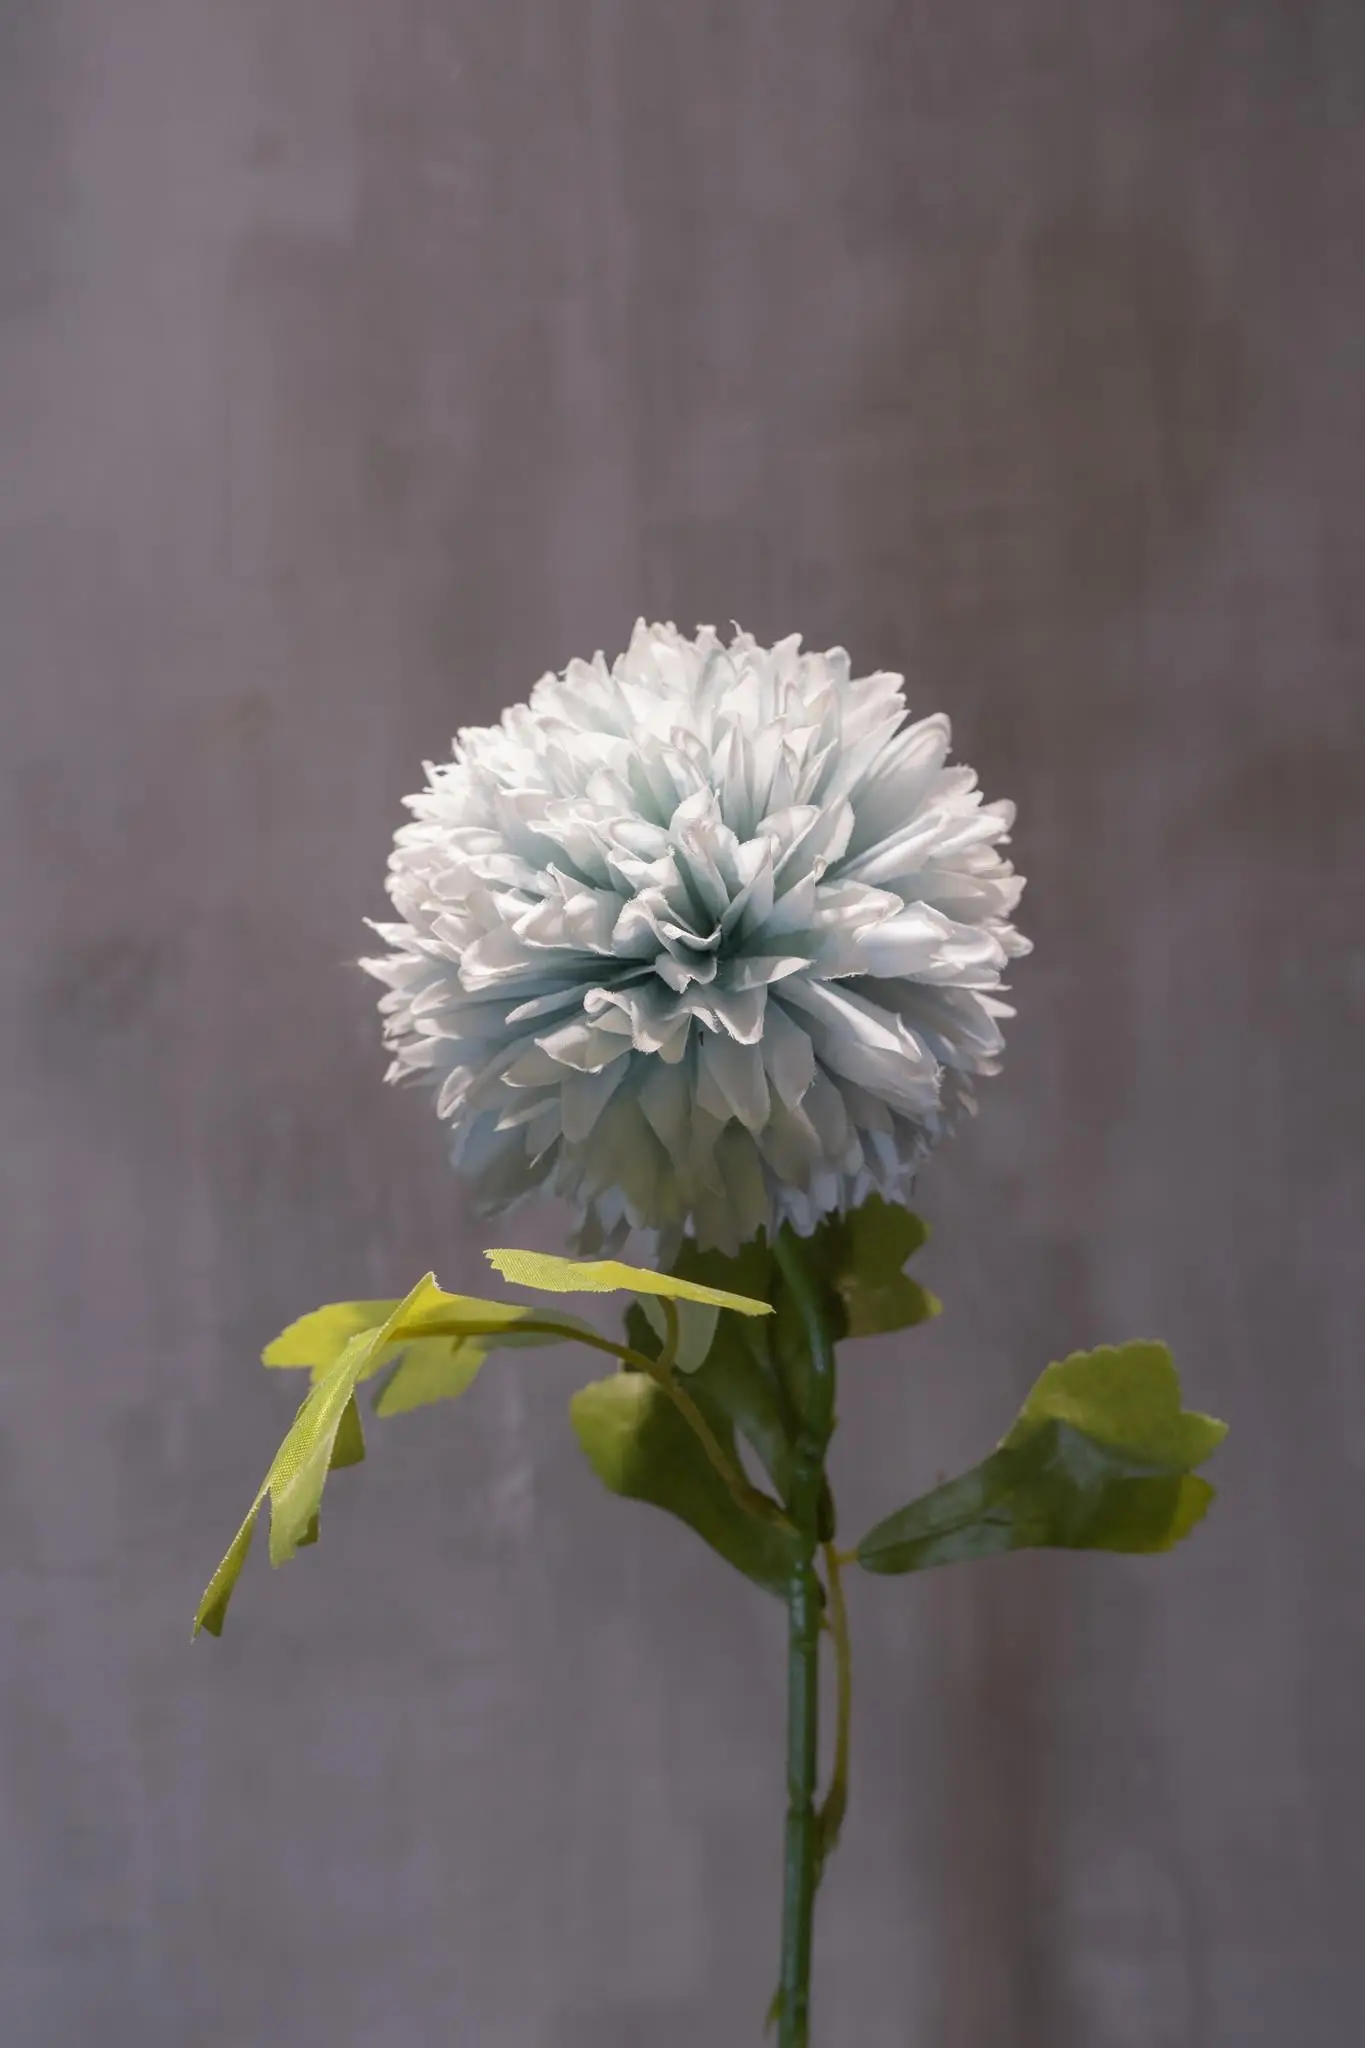 Online shop hot sale artificial ball chrysanthemum wrist corsage wedding decoration flower arrangement home decoration